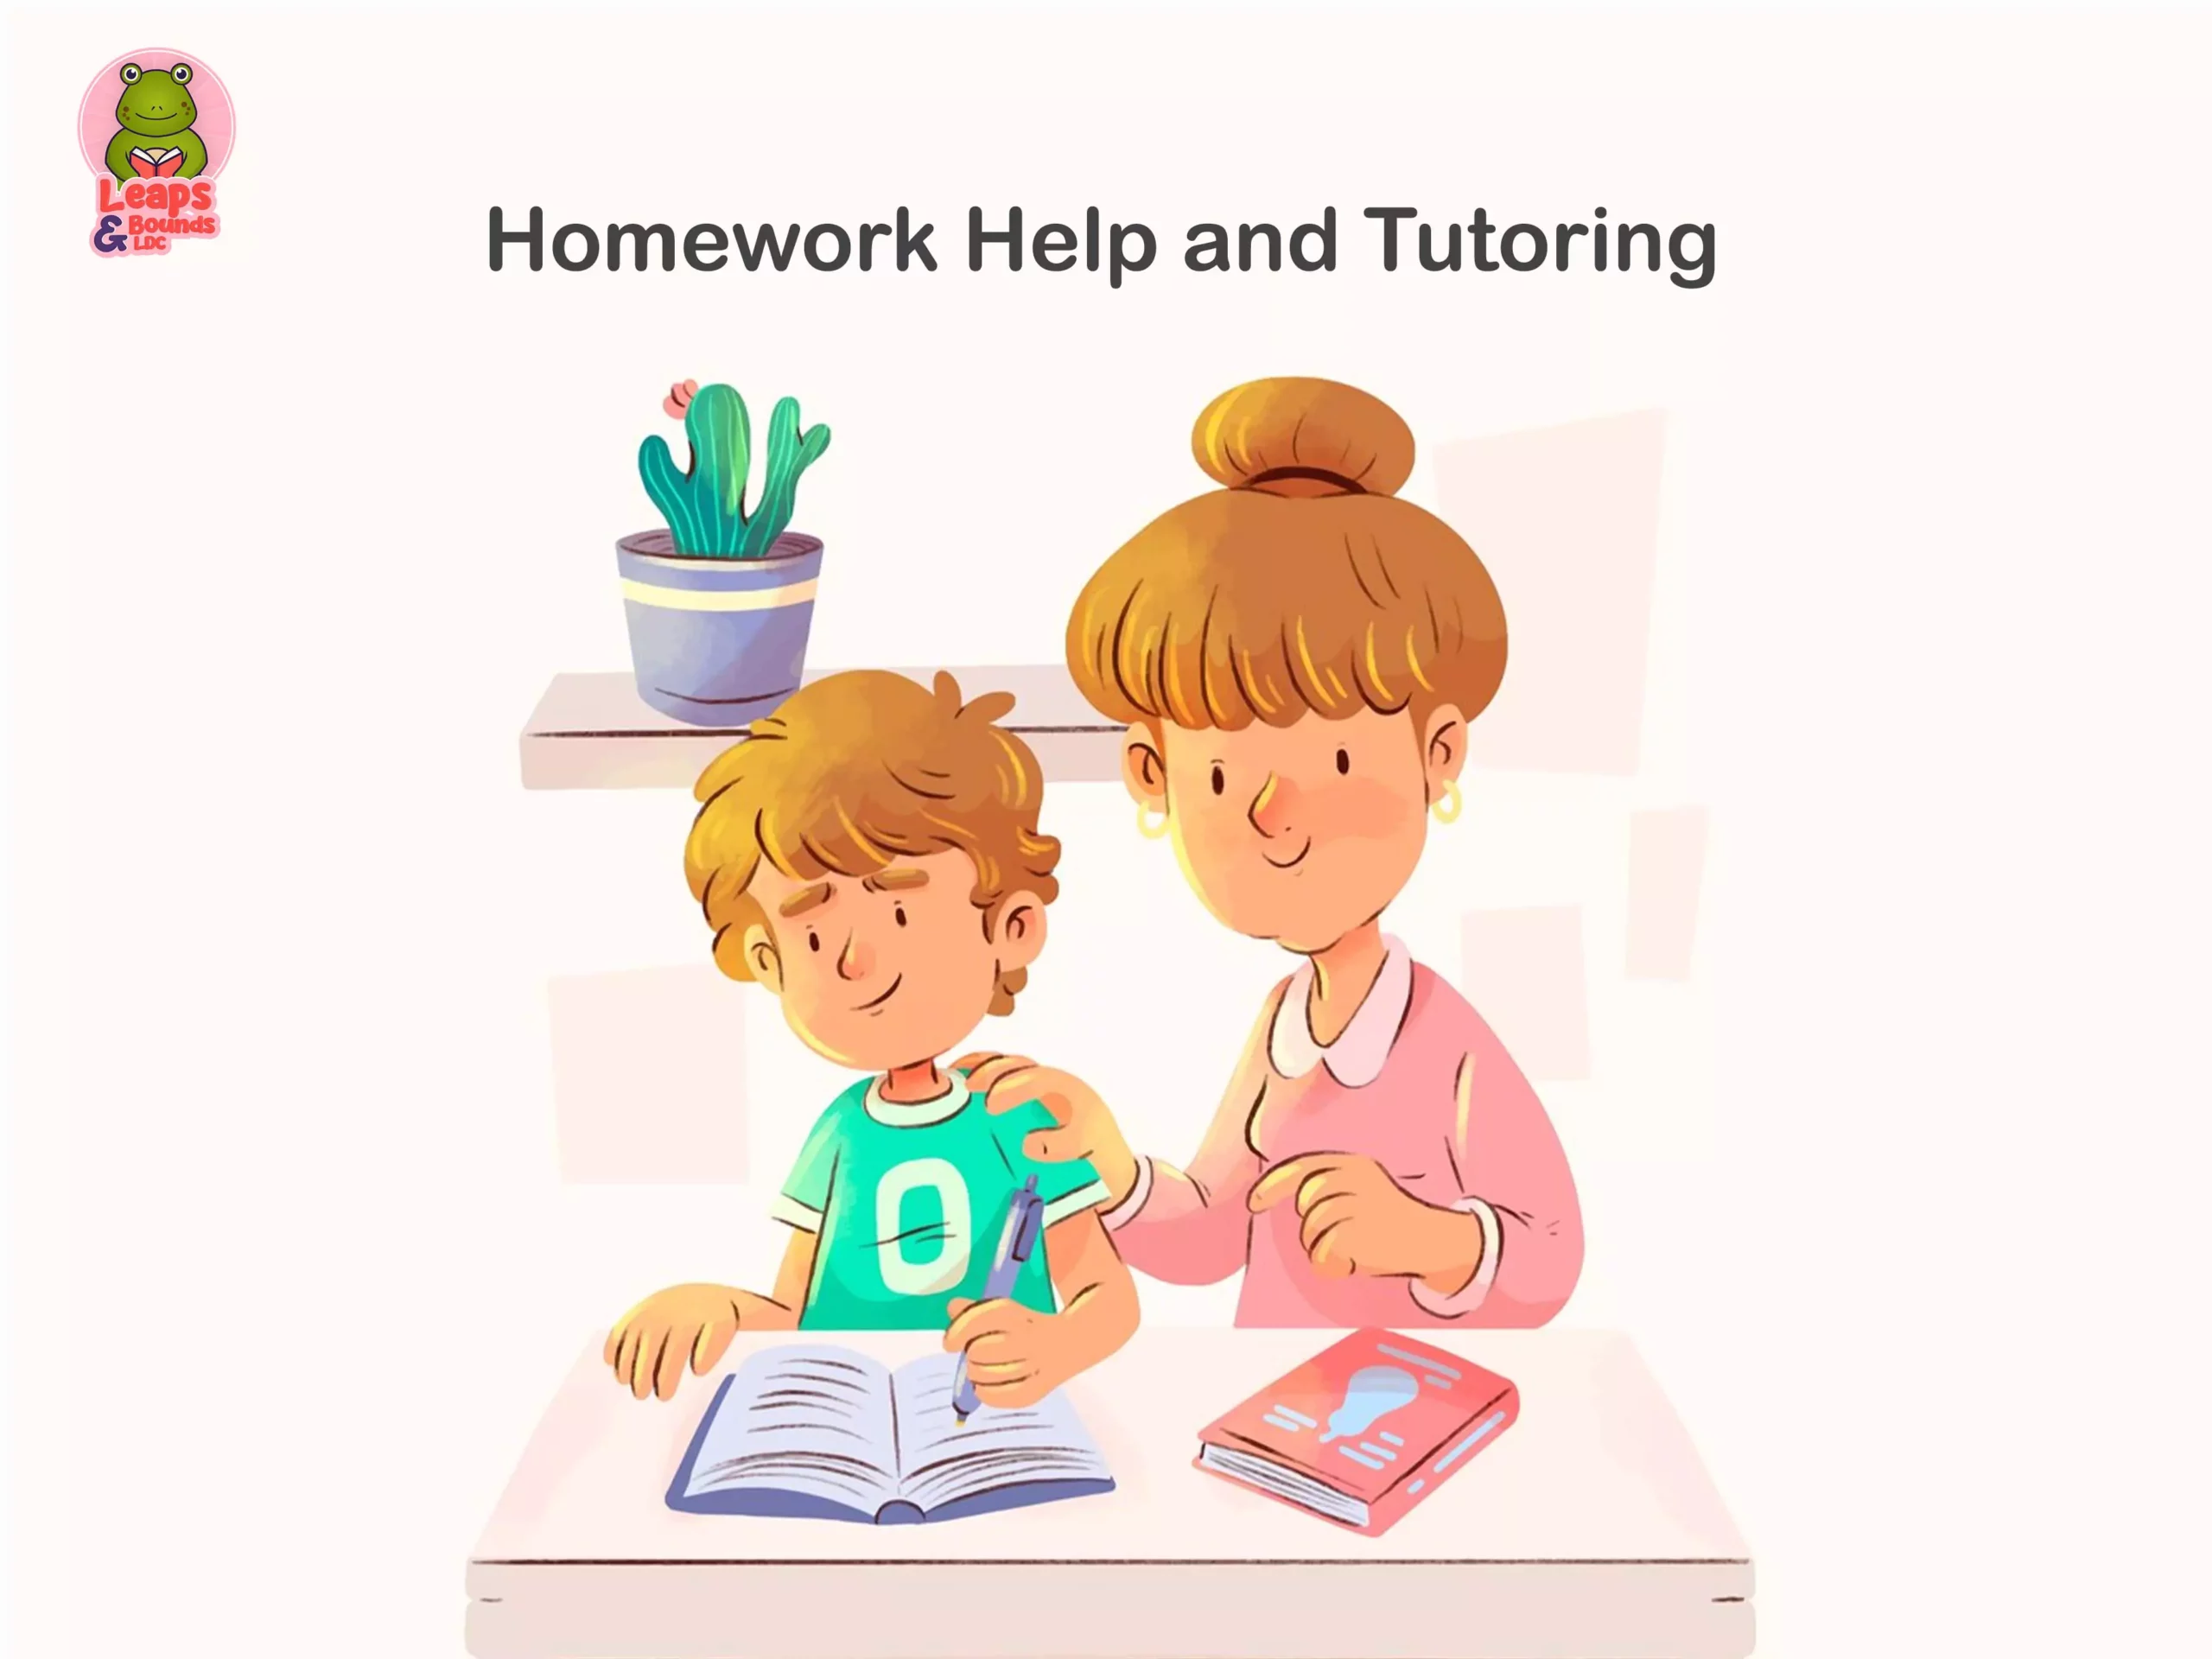 Homework Help and Tutoring